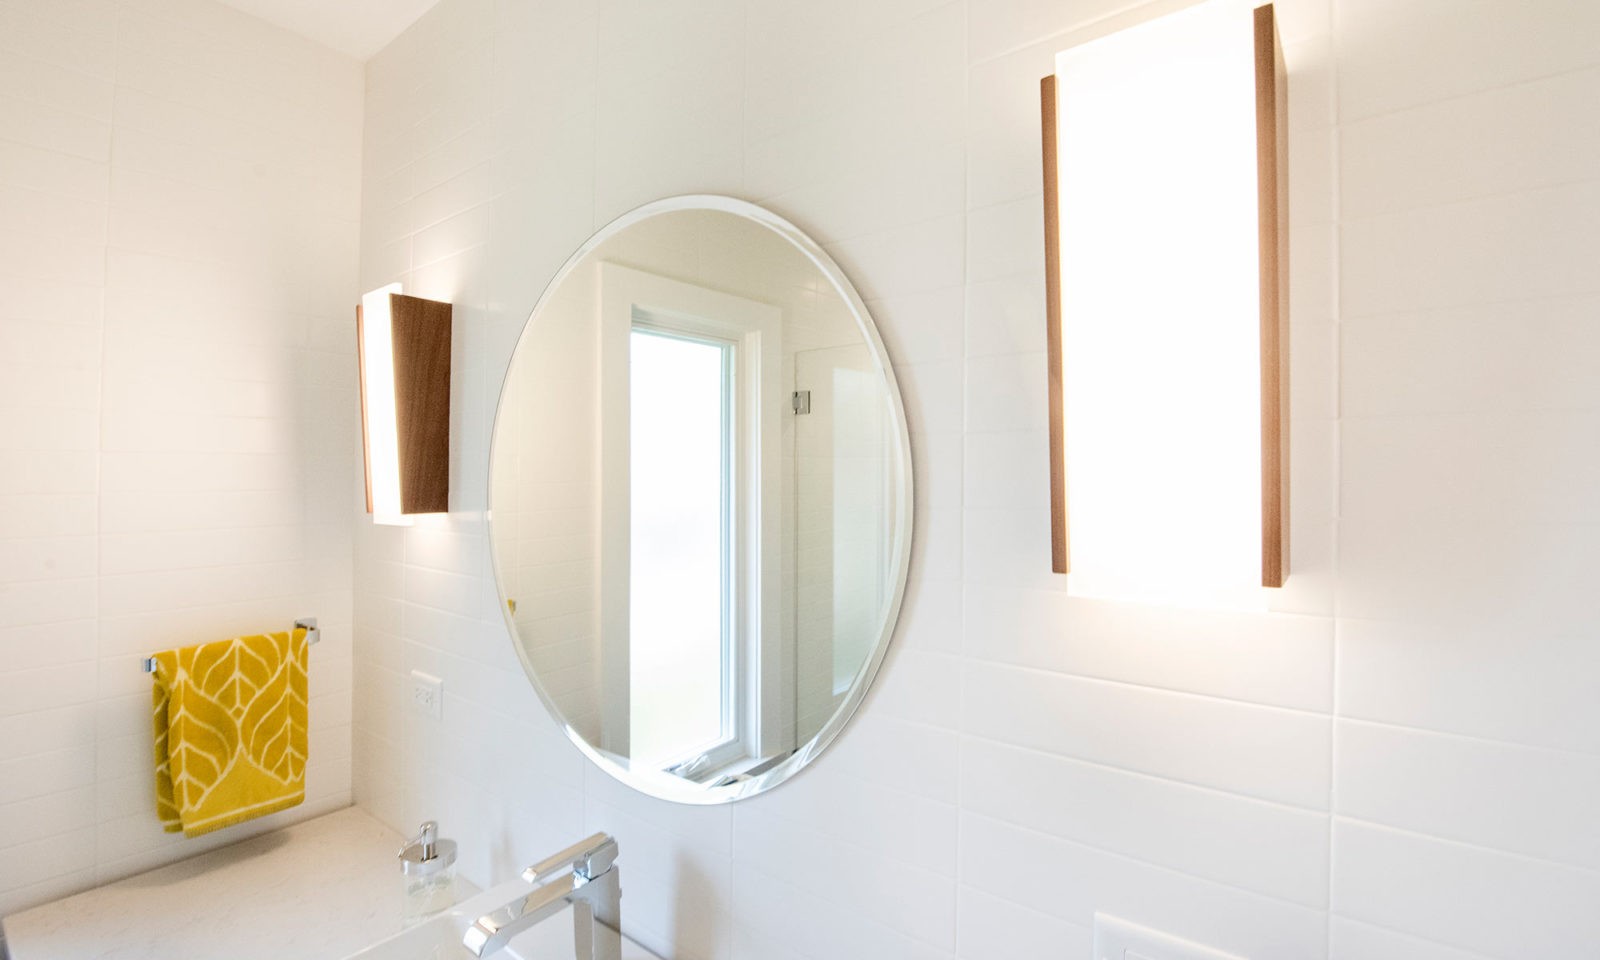 Riverside Illinois bathroom remodel round mirror and wood sconces